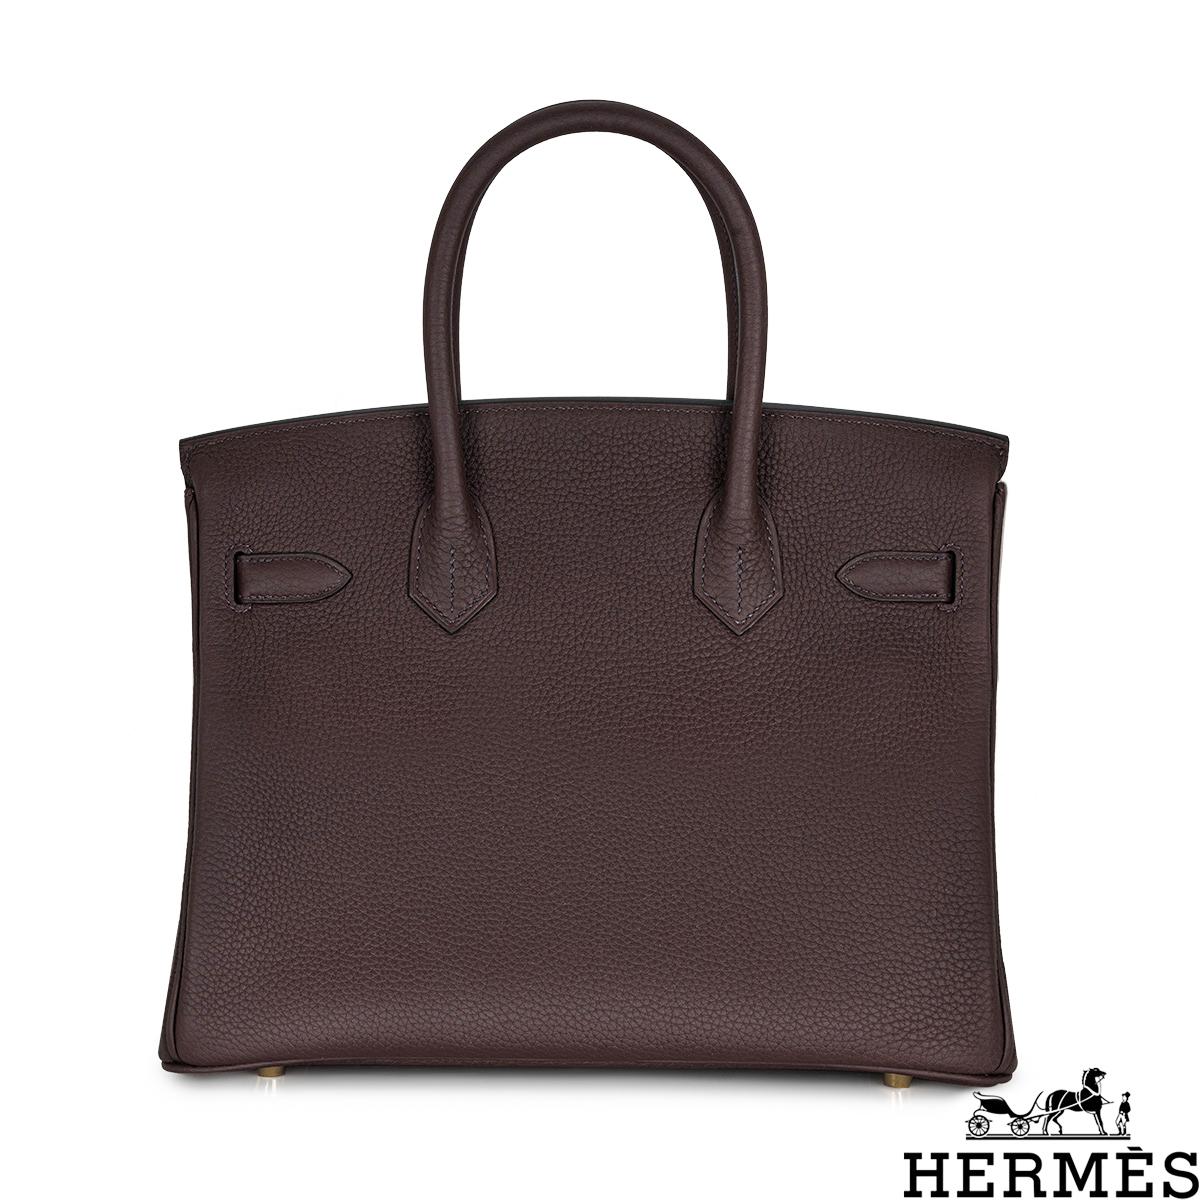 Black Hermès Birkin 30cm Rogue Sellier Togo GHW